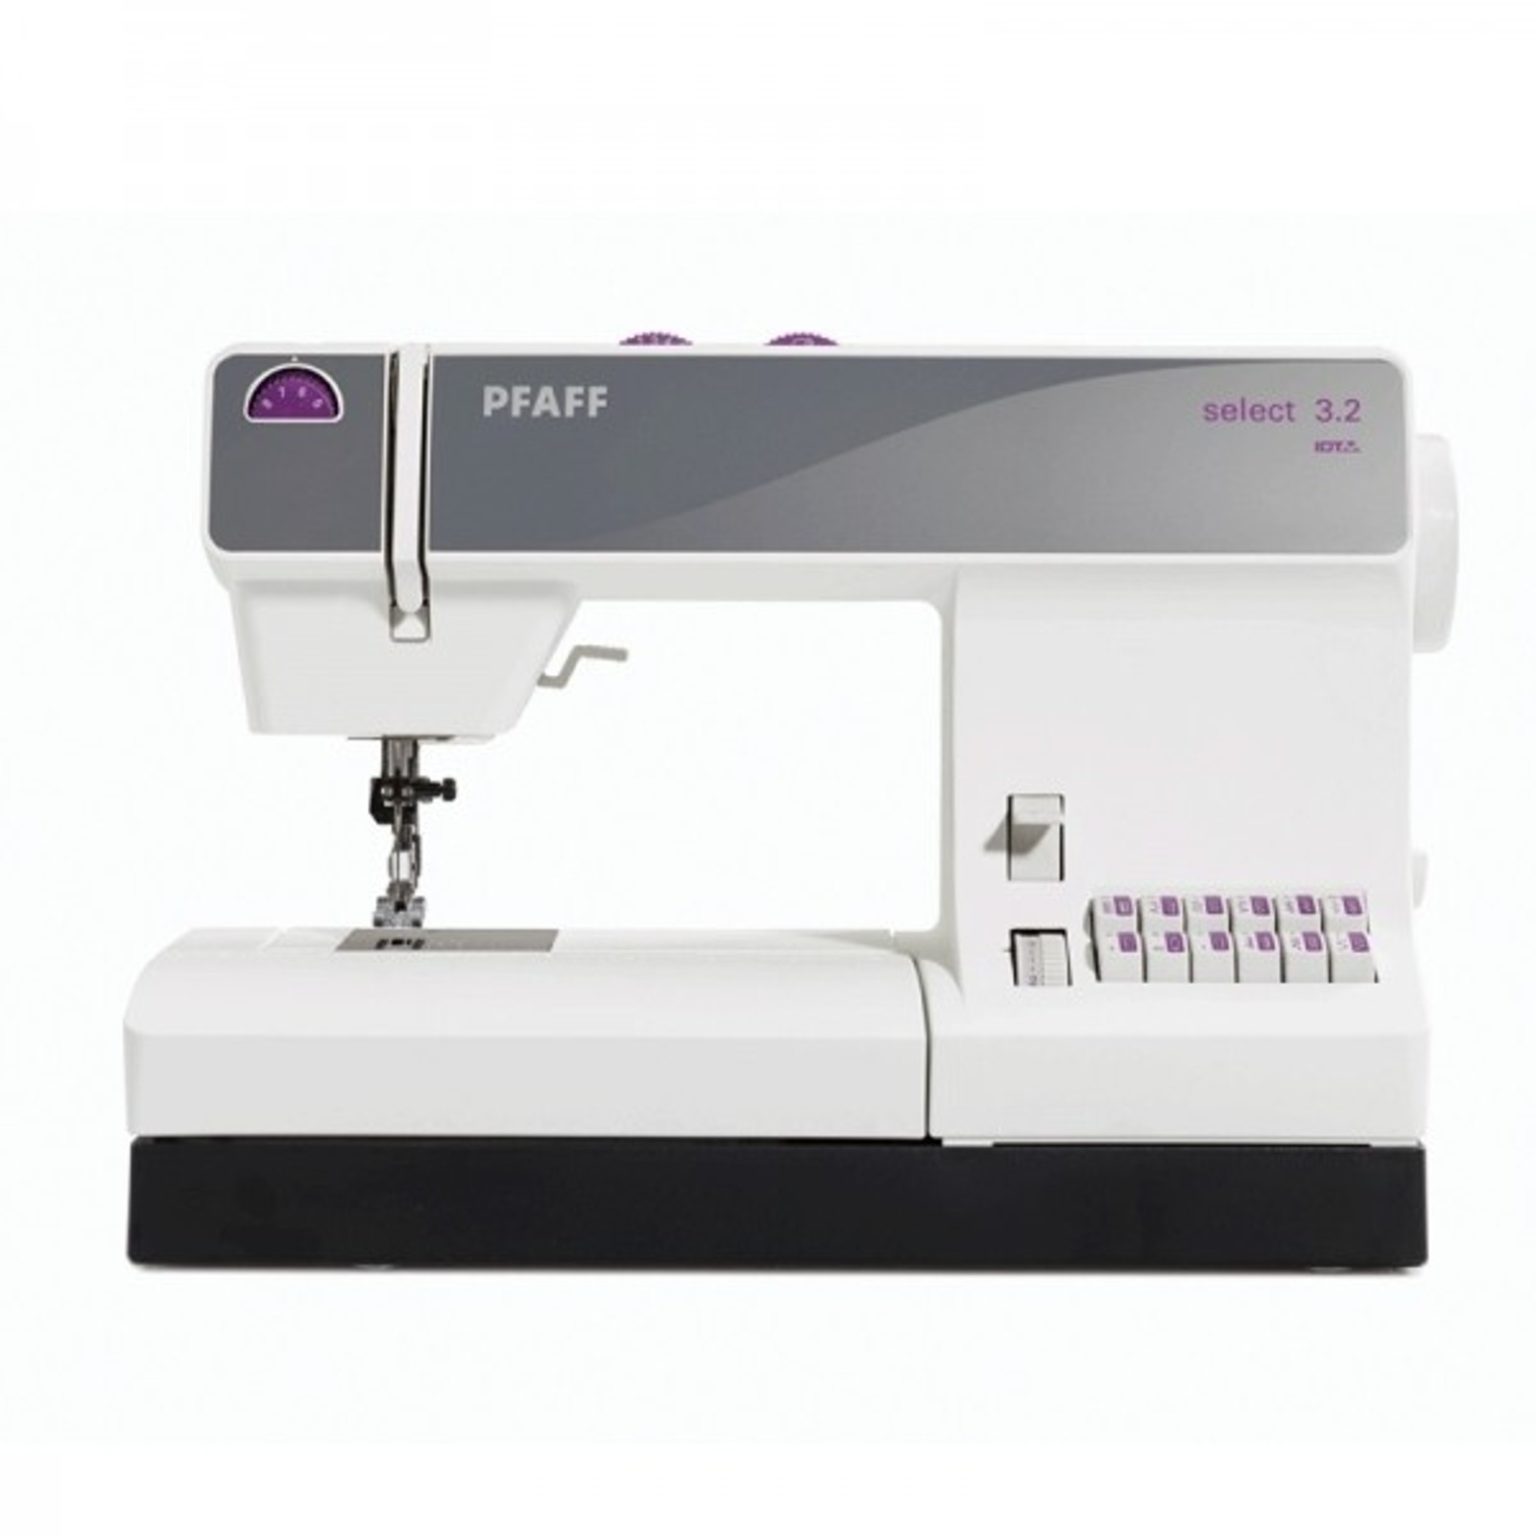 pfaff select 3.2 sewing machine | More Sewing